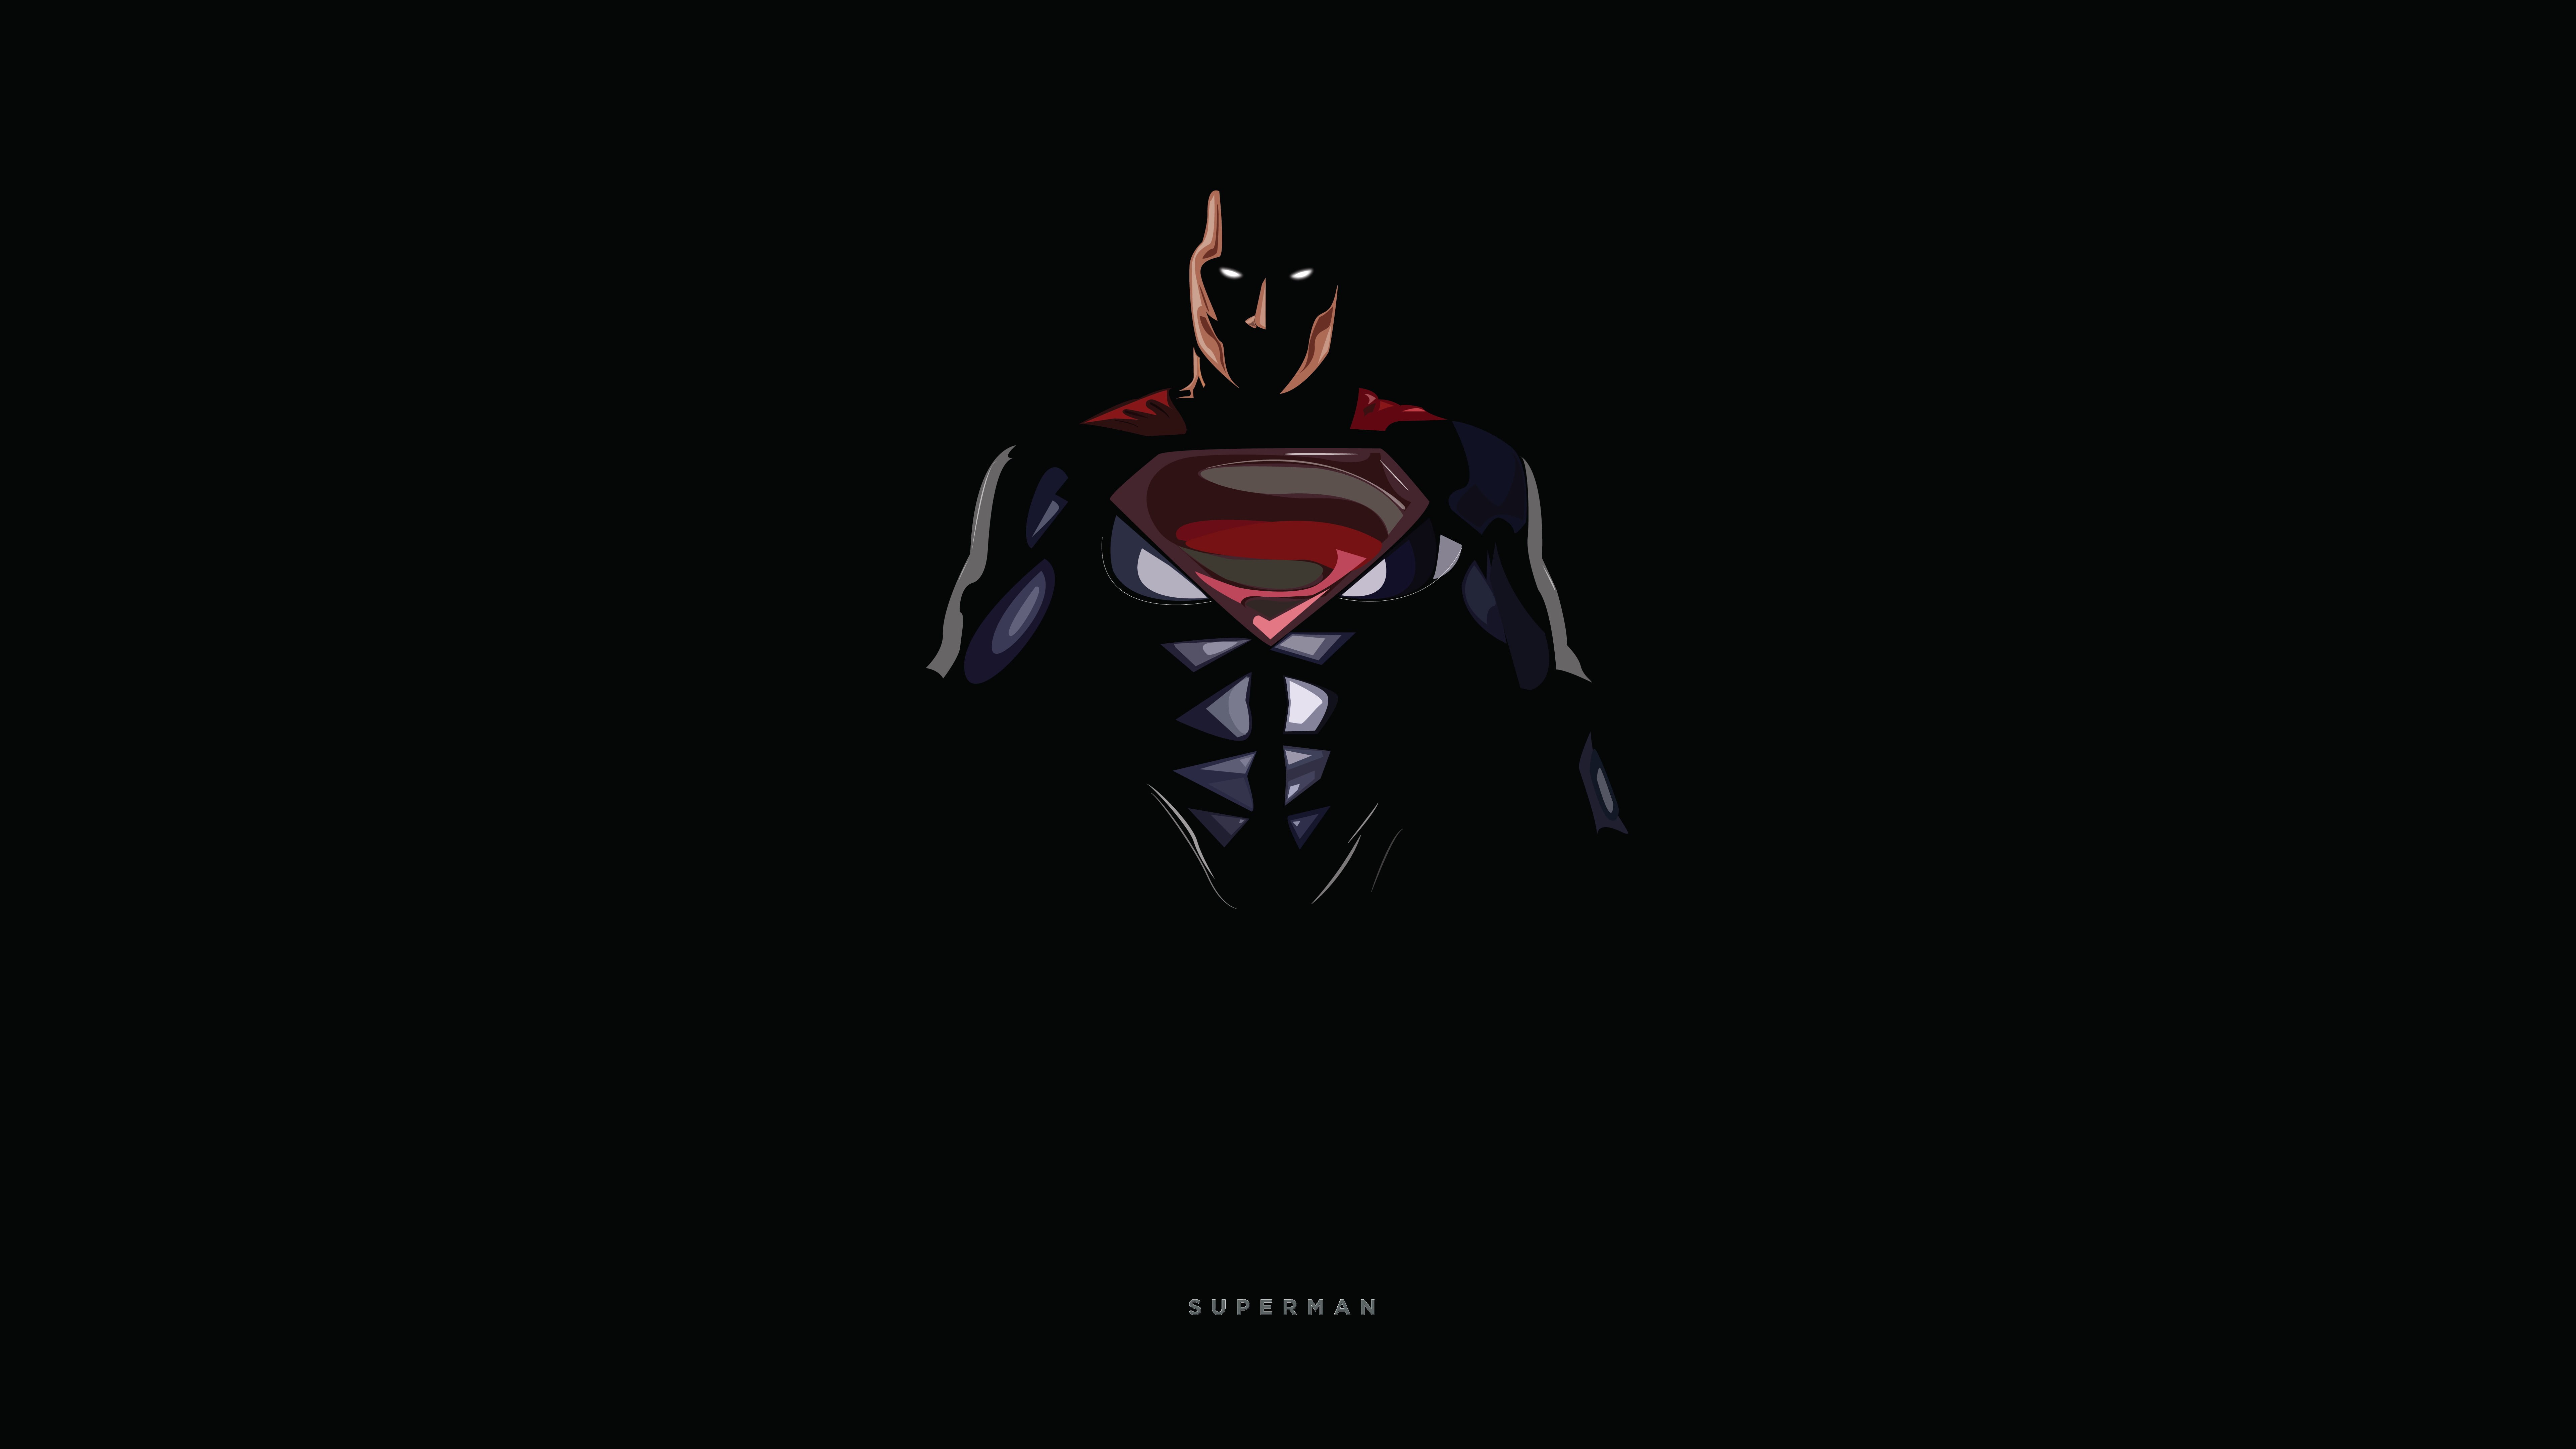 Wallpaper / DC Comics, 4K, Dark background, Superheroes, 8K, 8K, Minimal, Black, Superman free download